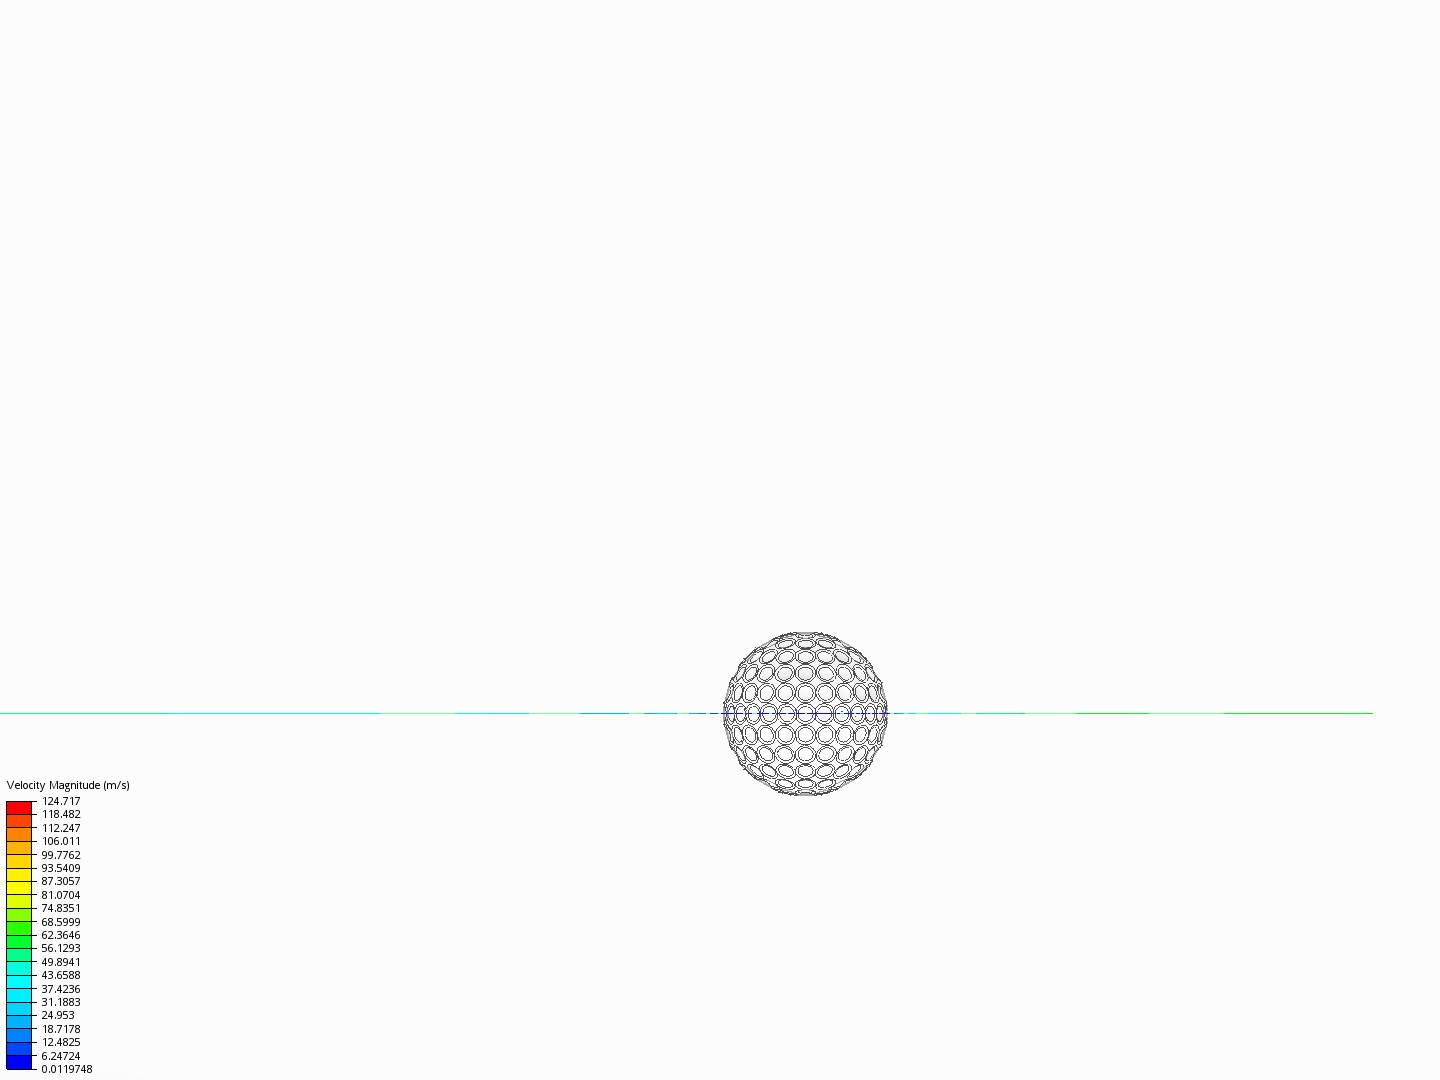 Spinning Golf Ball 60m/s 400 rad/s image